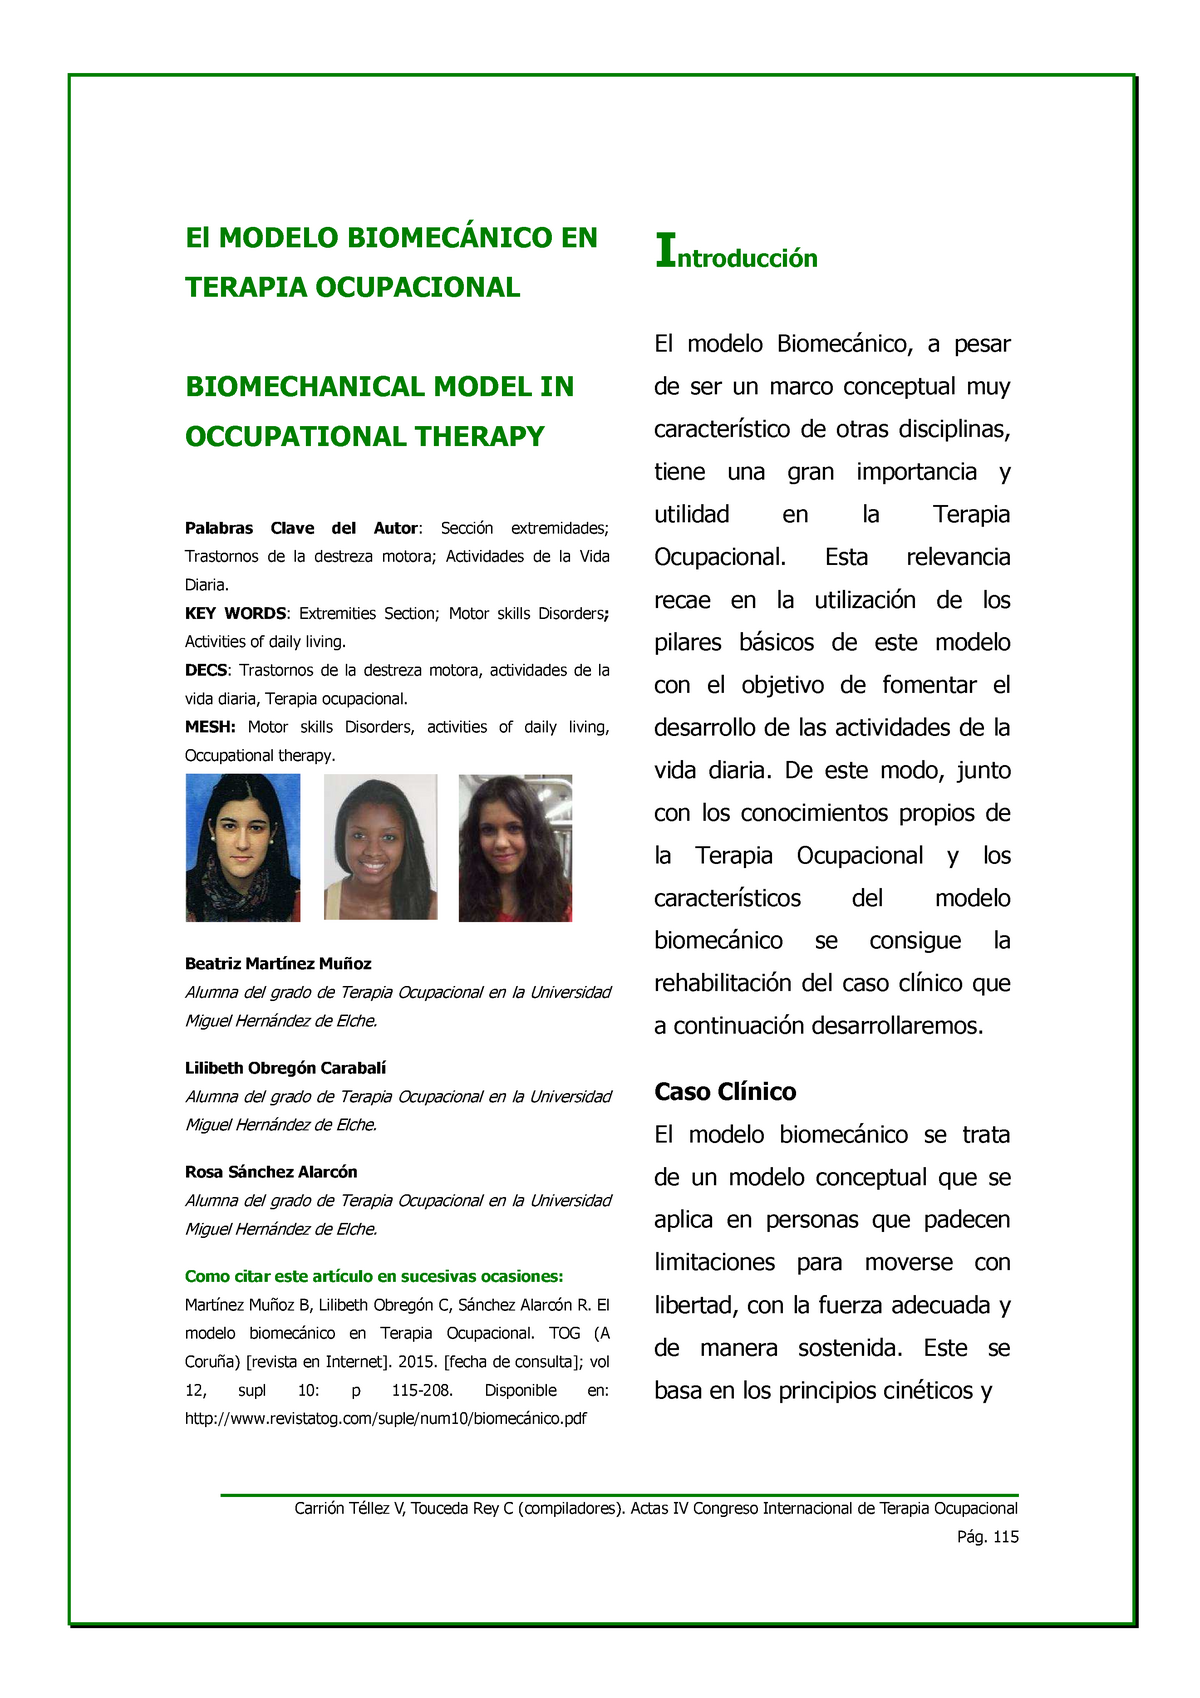 Dialnet-El Modelo Biomecanico En Terapia Ocupacional-5164523 - Carrión  Téllez V, Touceda Rey C - Studocu